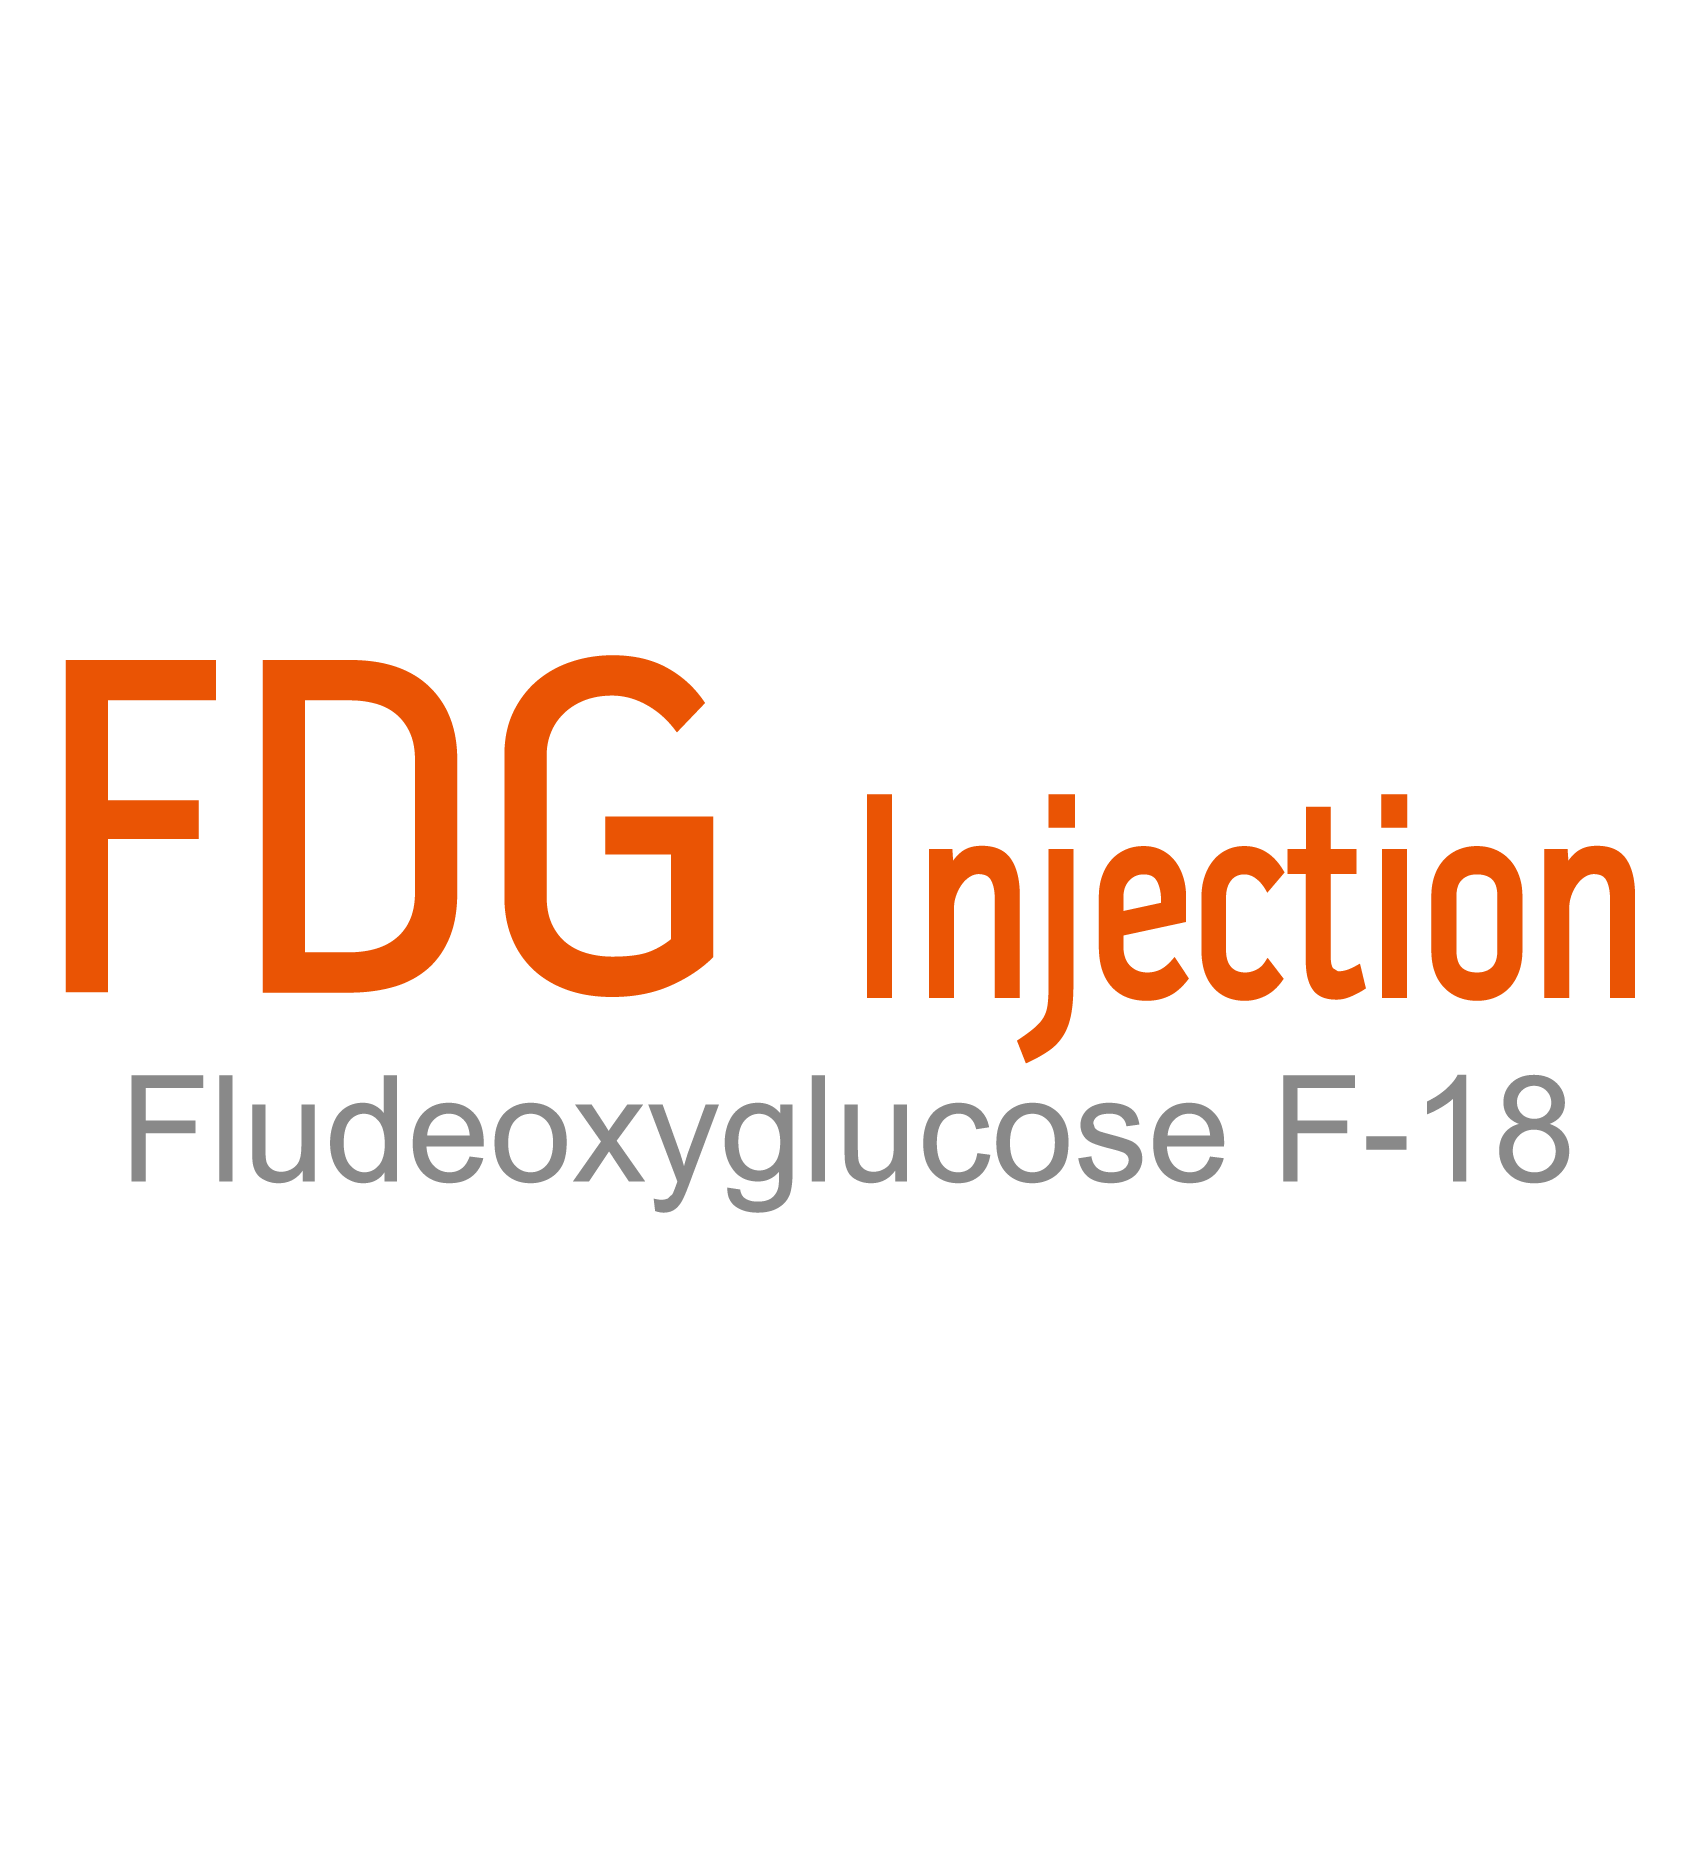 氟攝糖造影注射劑GMS Fludeoxyglucose F-18 Injection